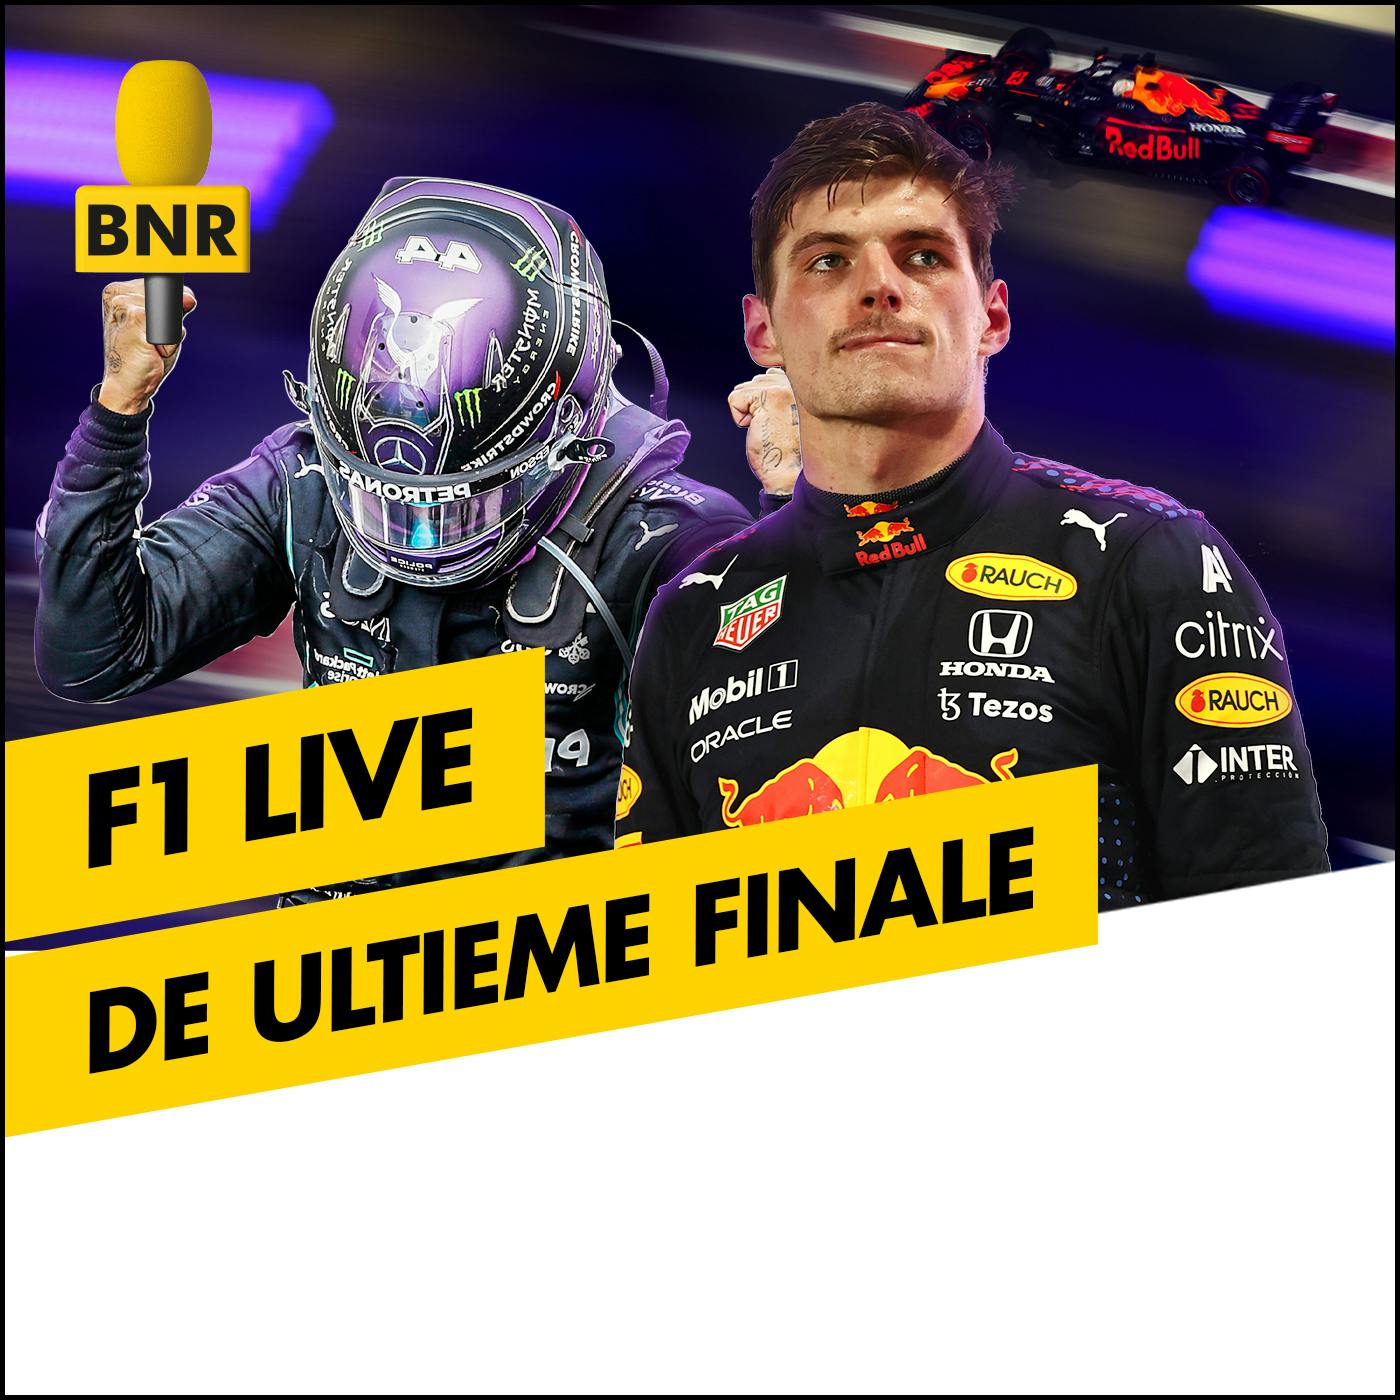 Finale Formule 1 live bij BNR